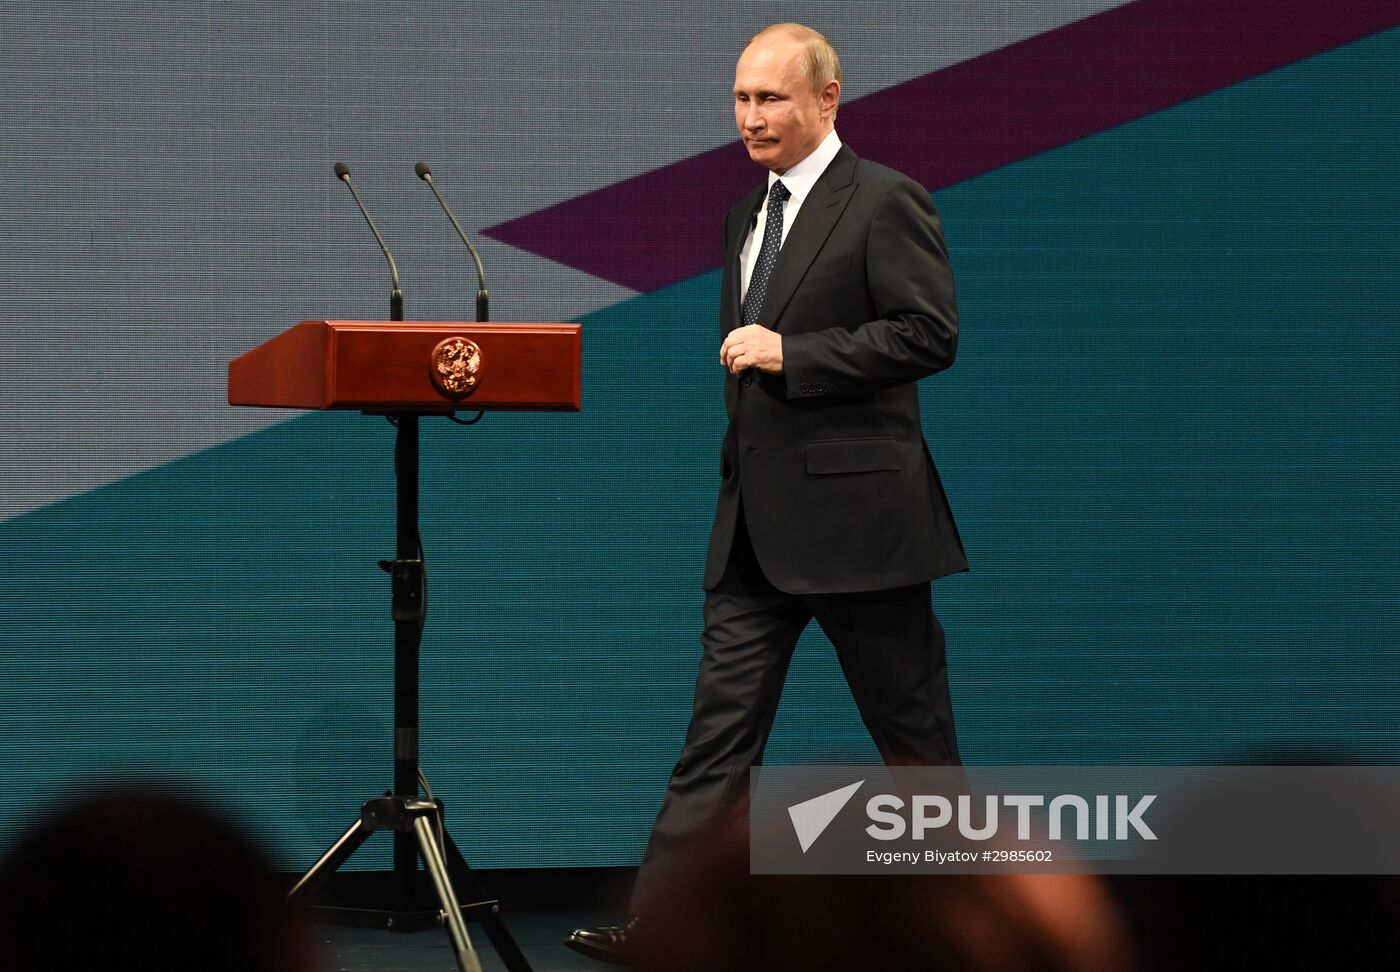 President Vladimir Putin's trip to St. Petersburg